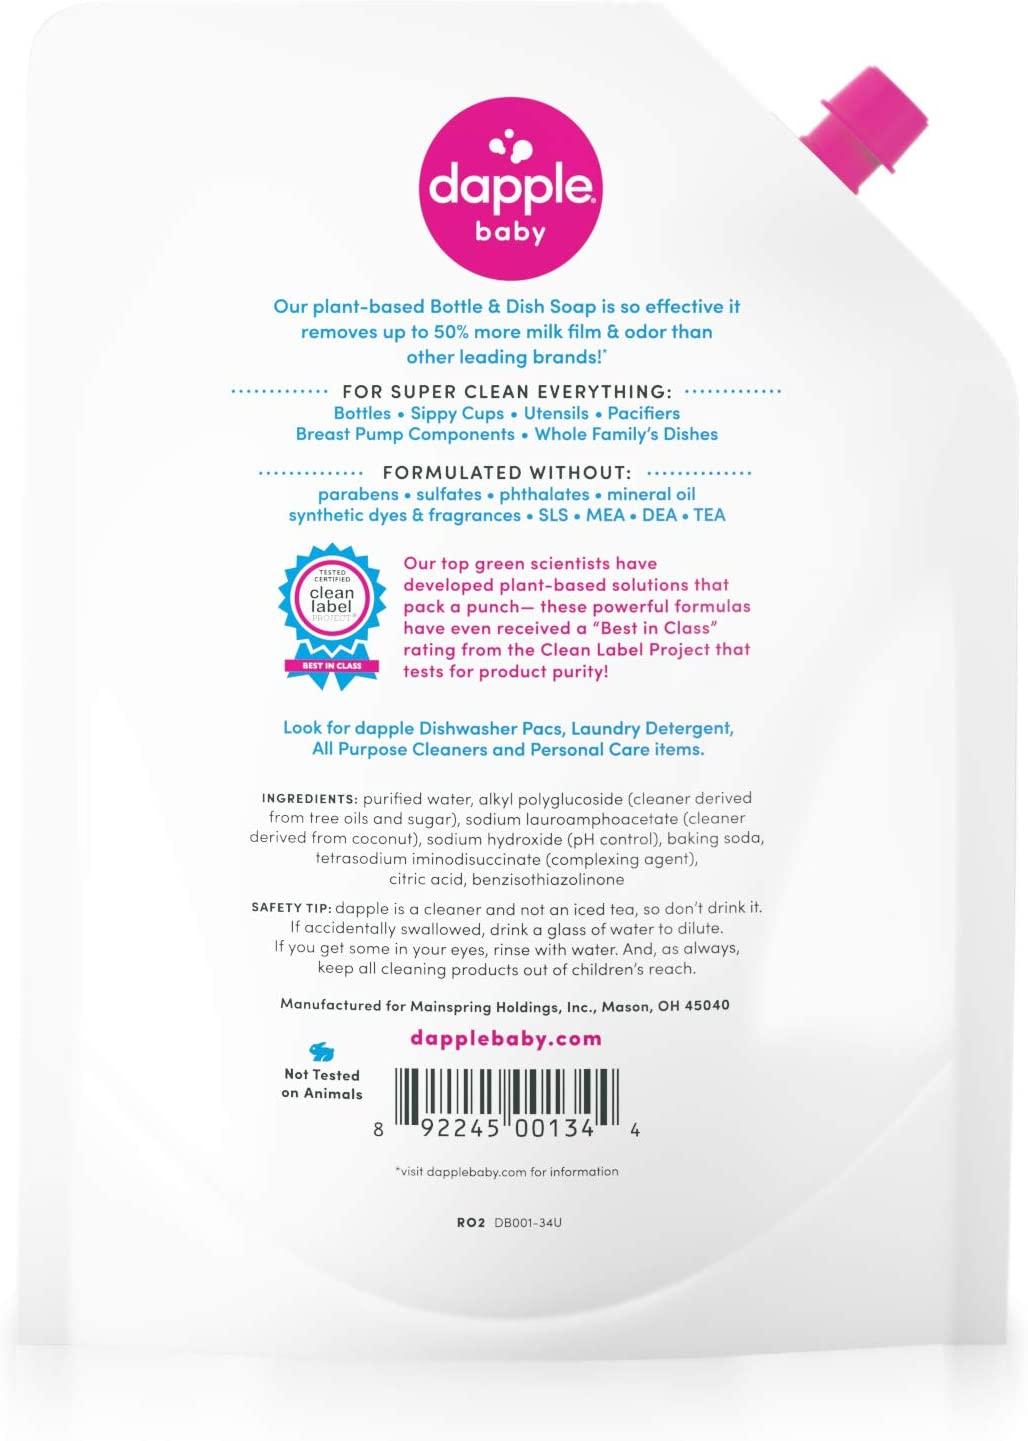 Dapple Bottle & Dish Soap - Fragrance Free - 3 fl oz